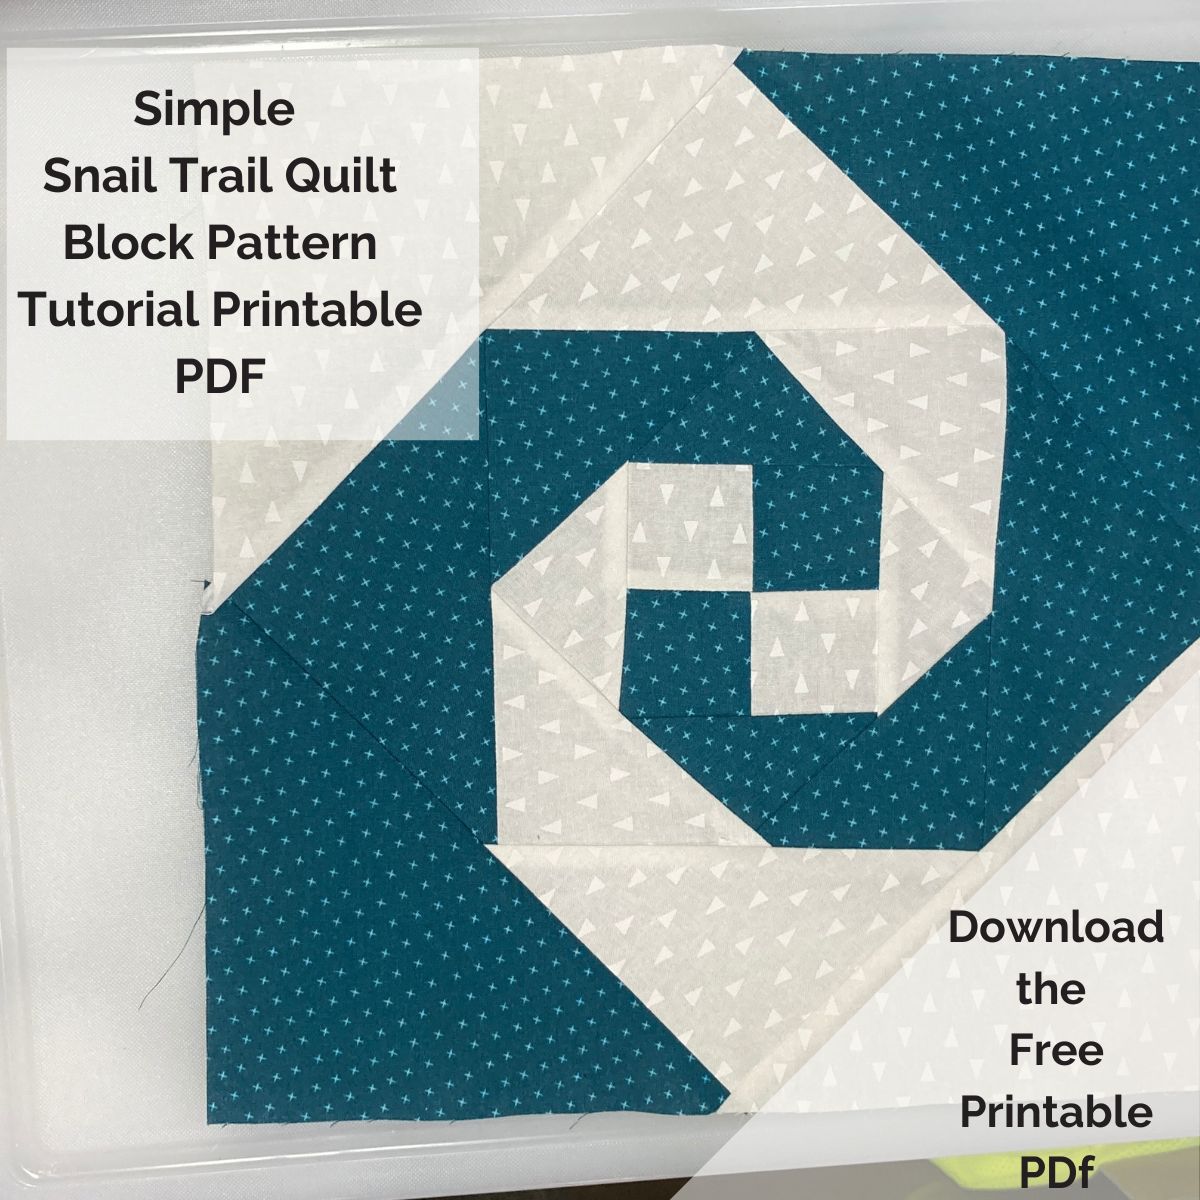 Simple Snail Trail Quilt Block Pattern Tutorial Printable PDF